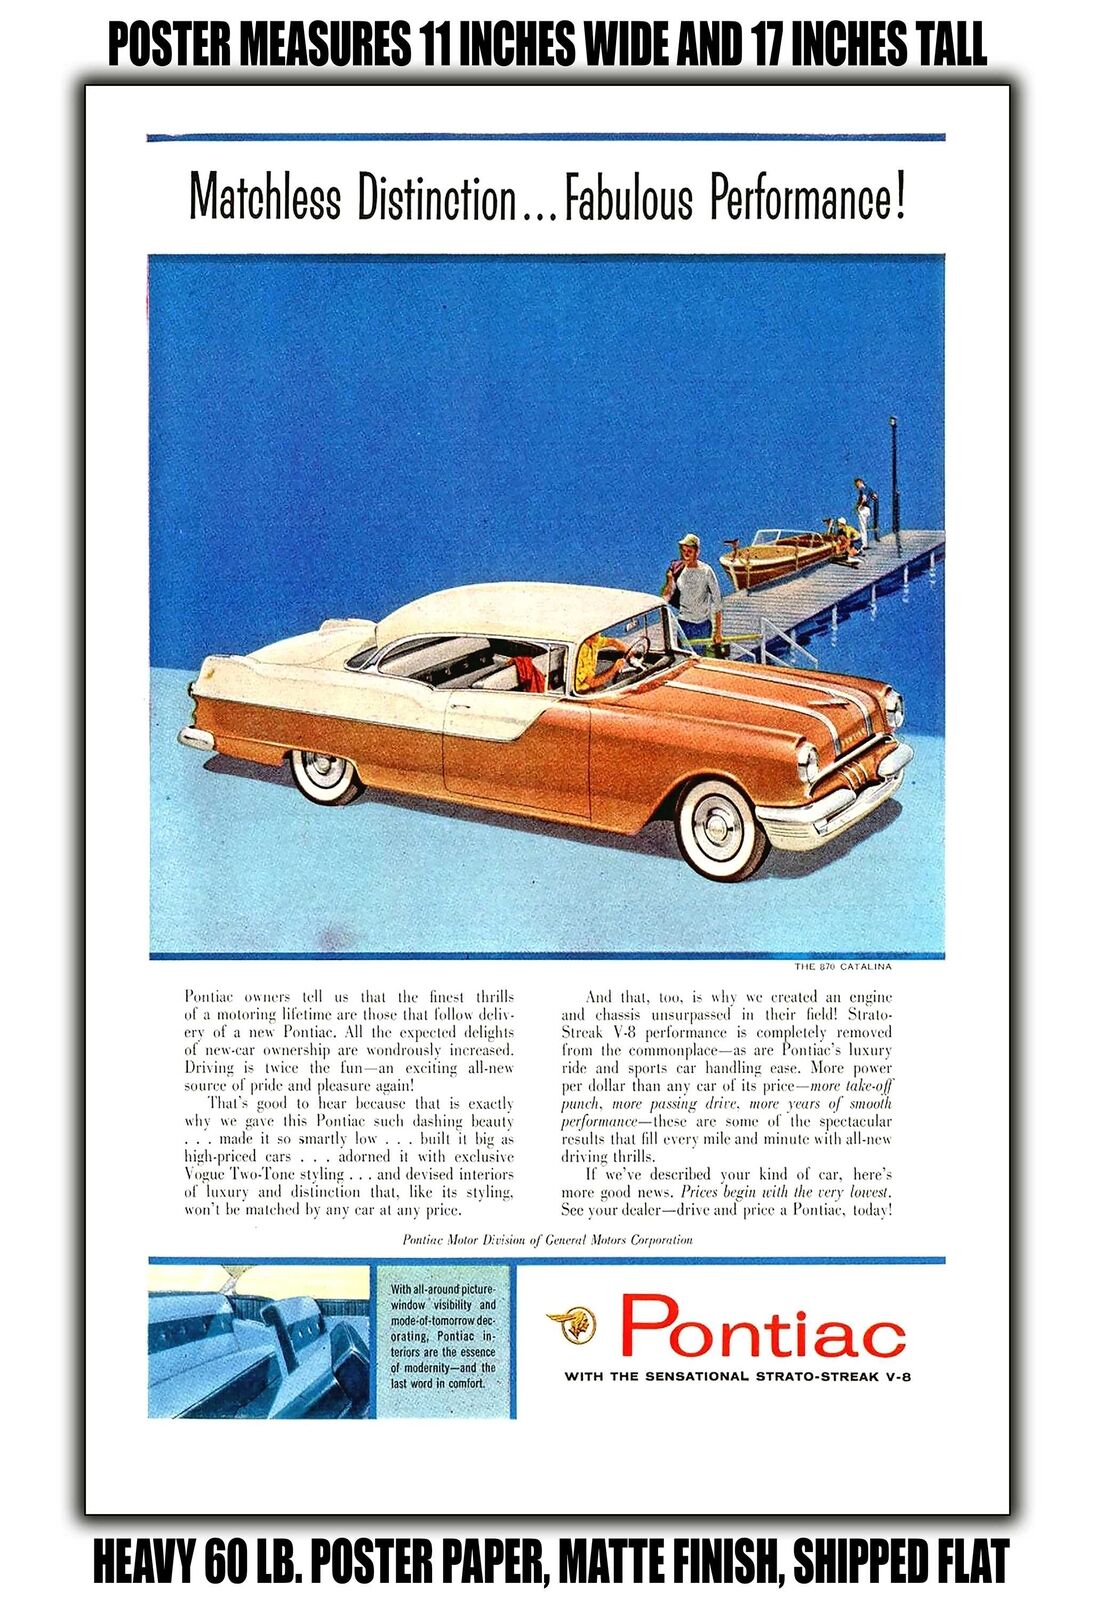 11x17 POSTER - 1955 Pontiac Catalina Matchless Distinction. Fabulous Performance